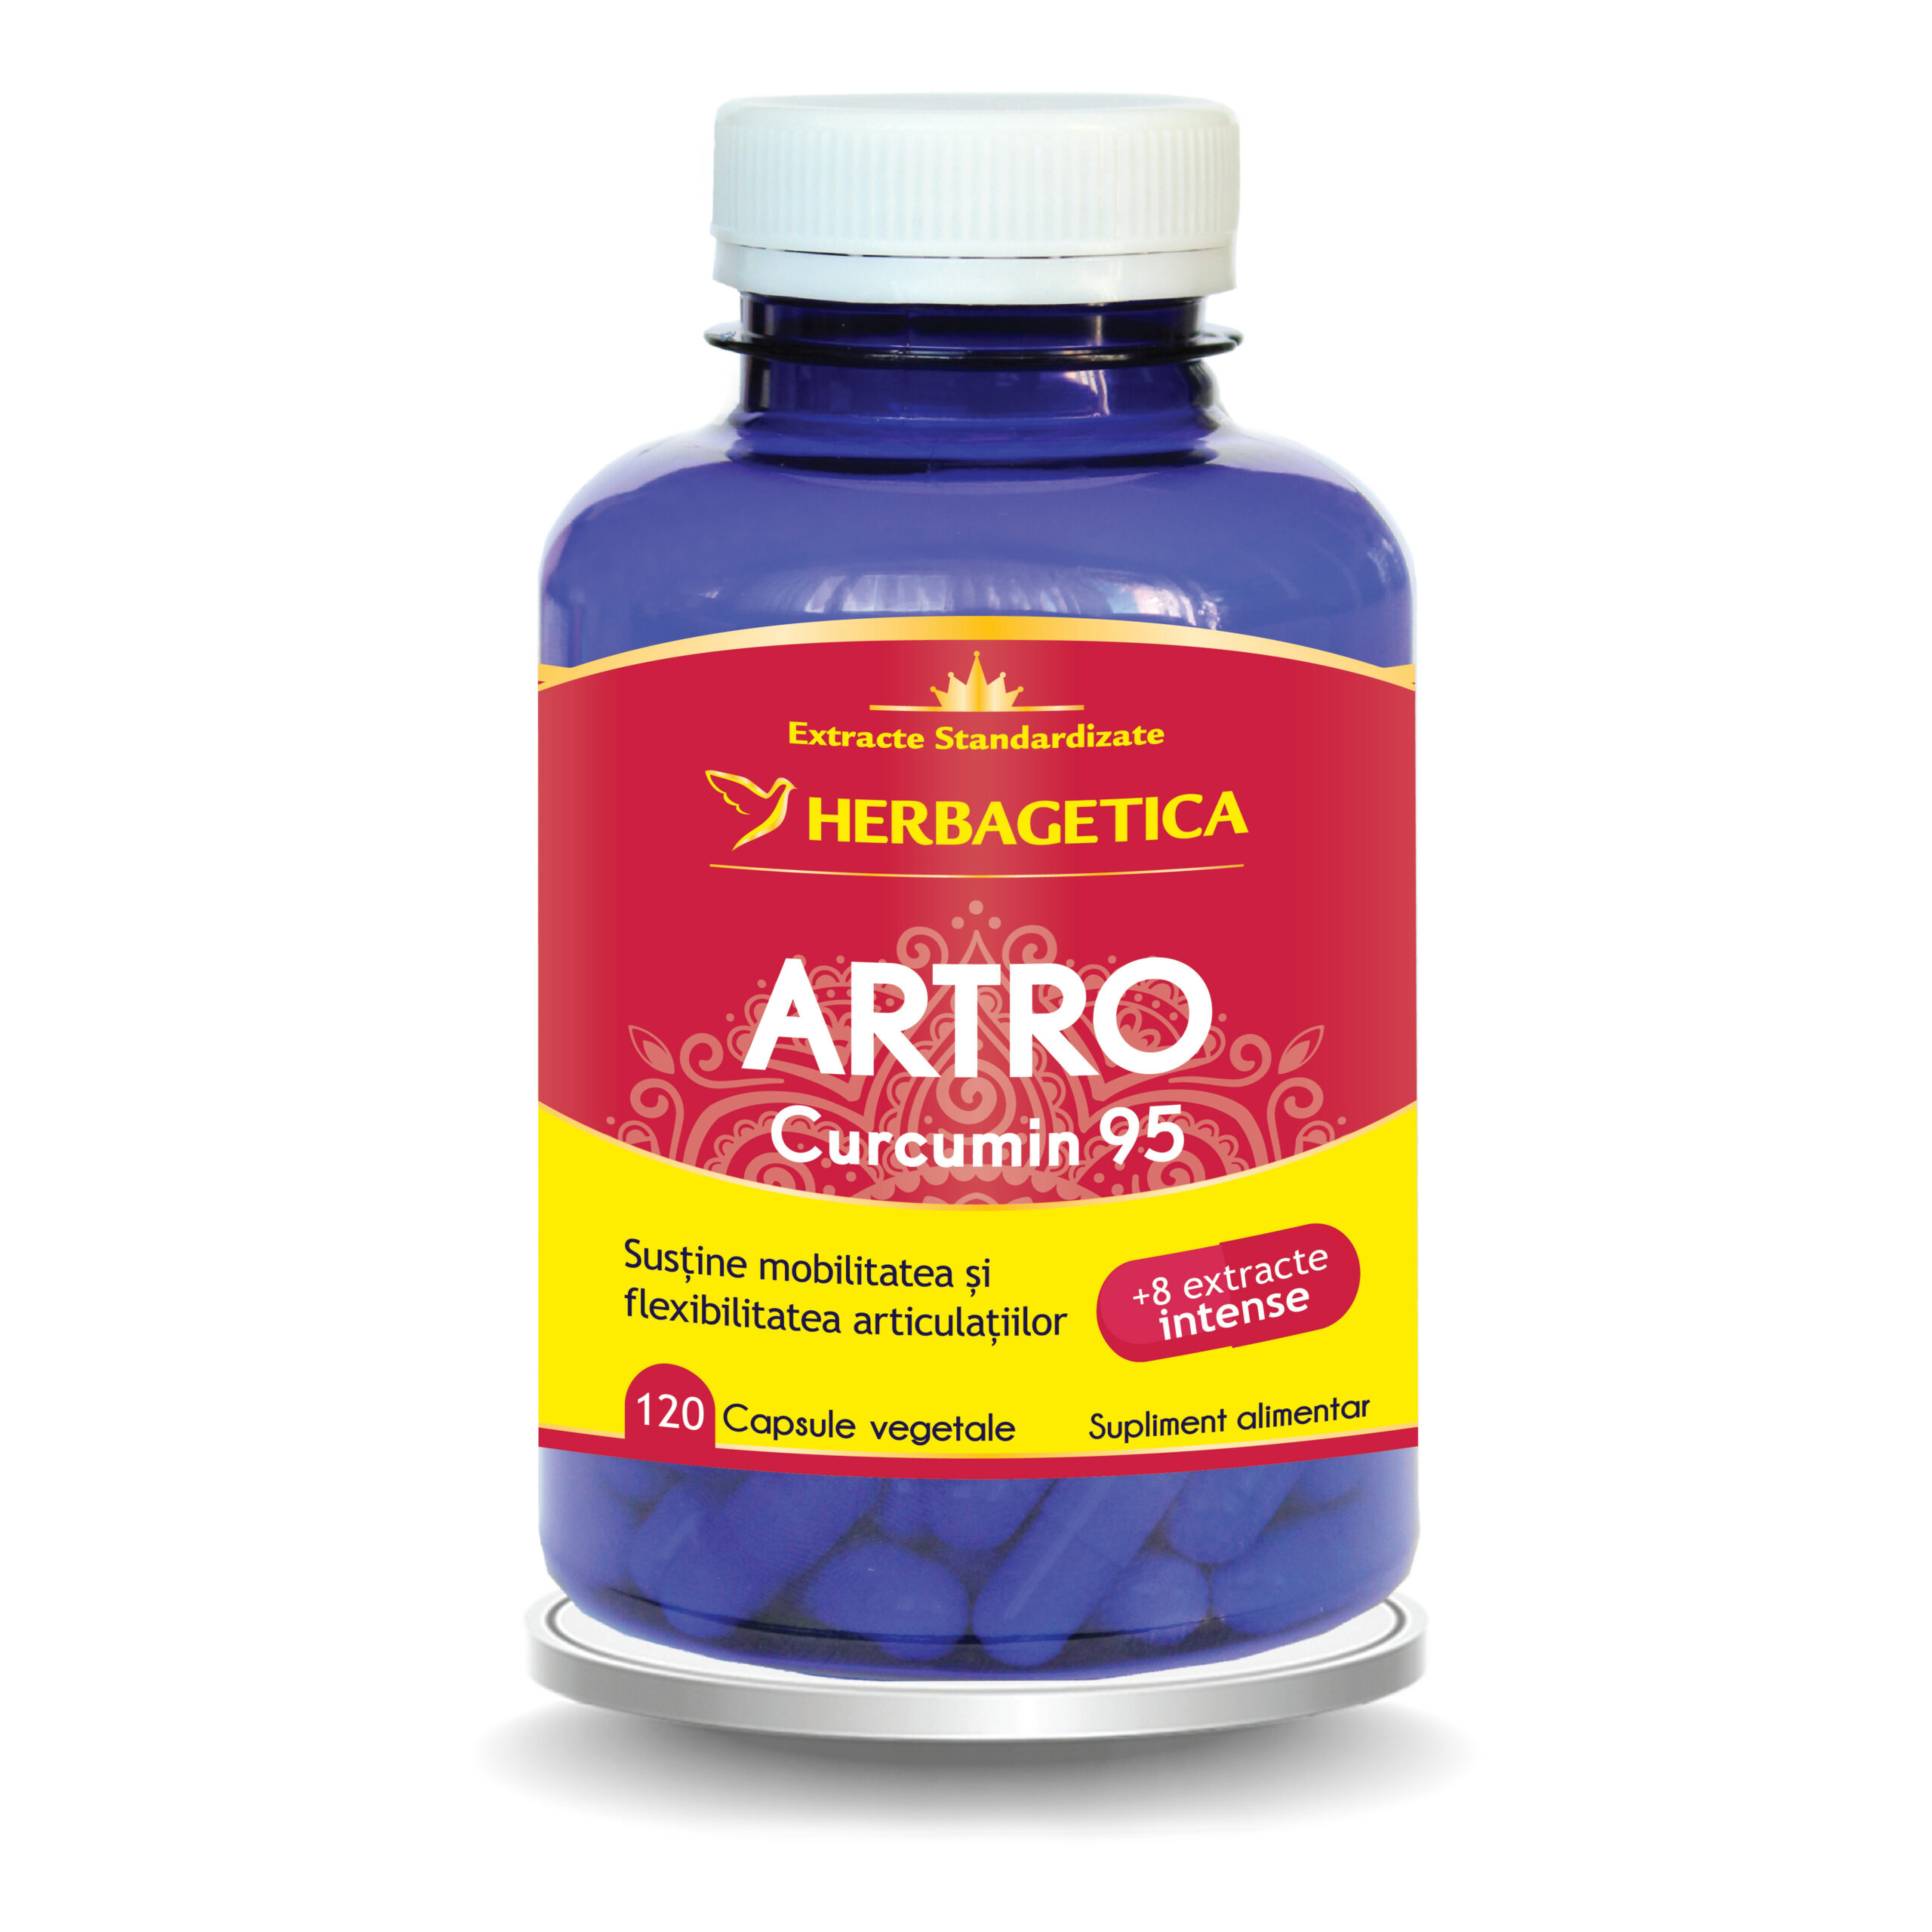 Herbagetica Artro Curcumin95 120 Capsule